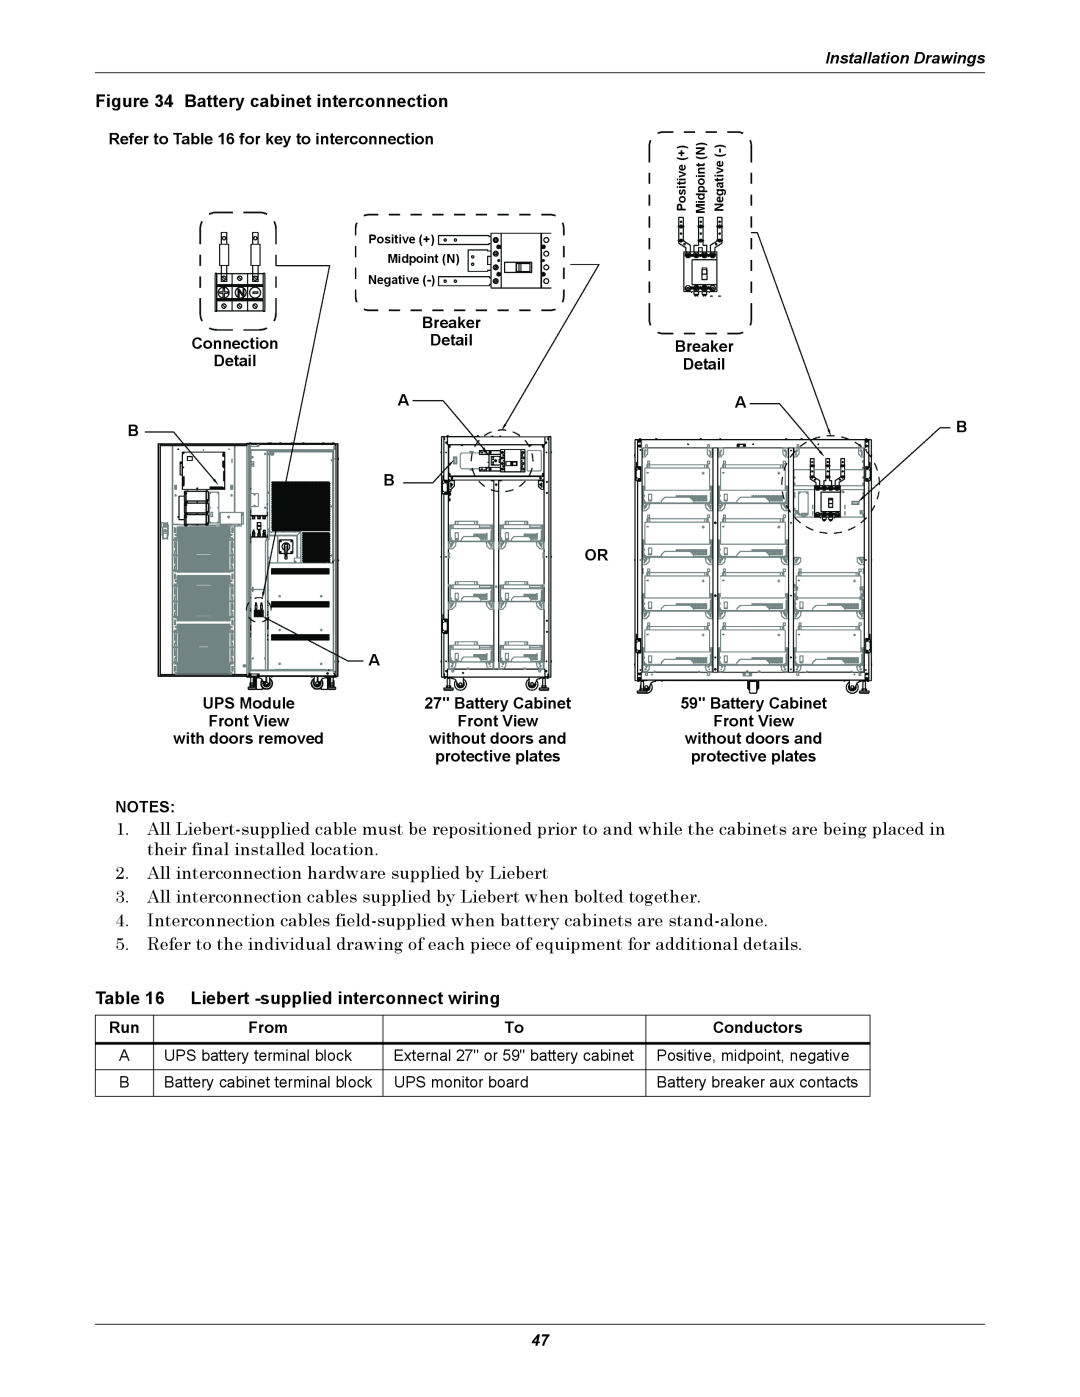 Emerson 208V, 10-30kVA Battery cabinet interconnection, Liebert -suppliedinterconnect wiring, Installation Drawings 